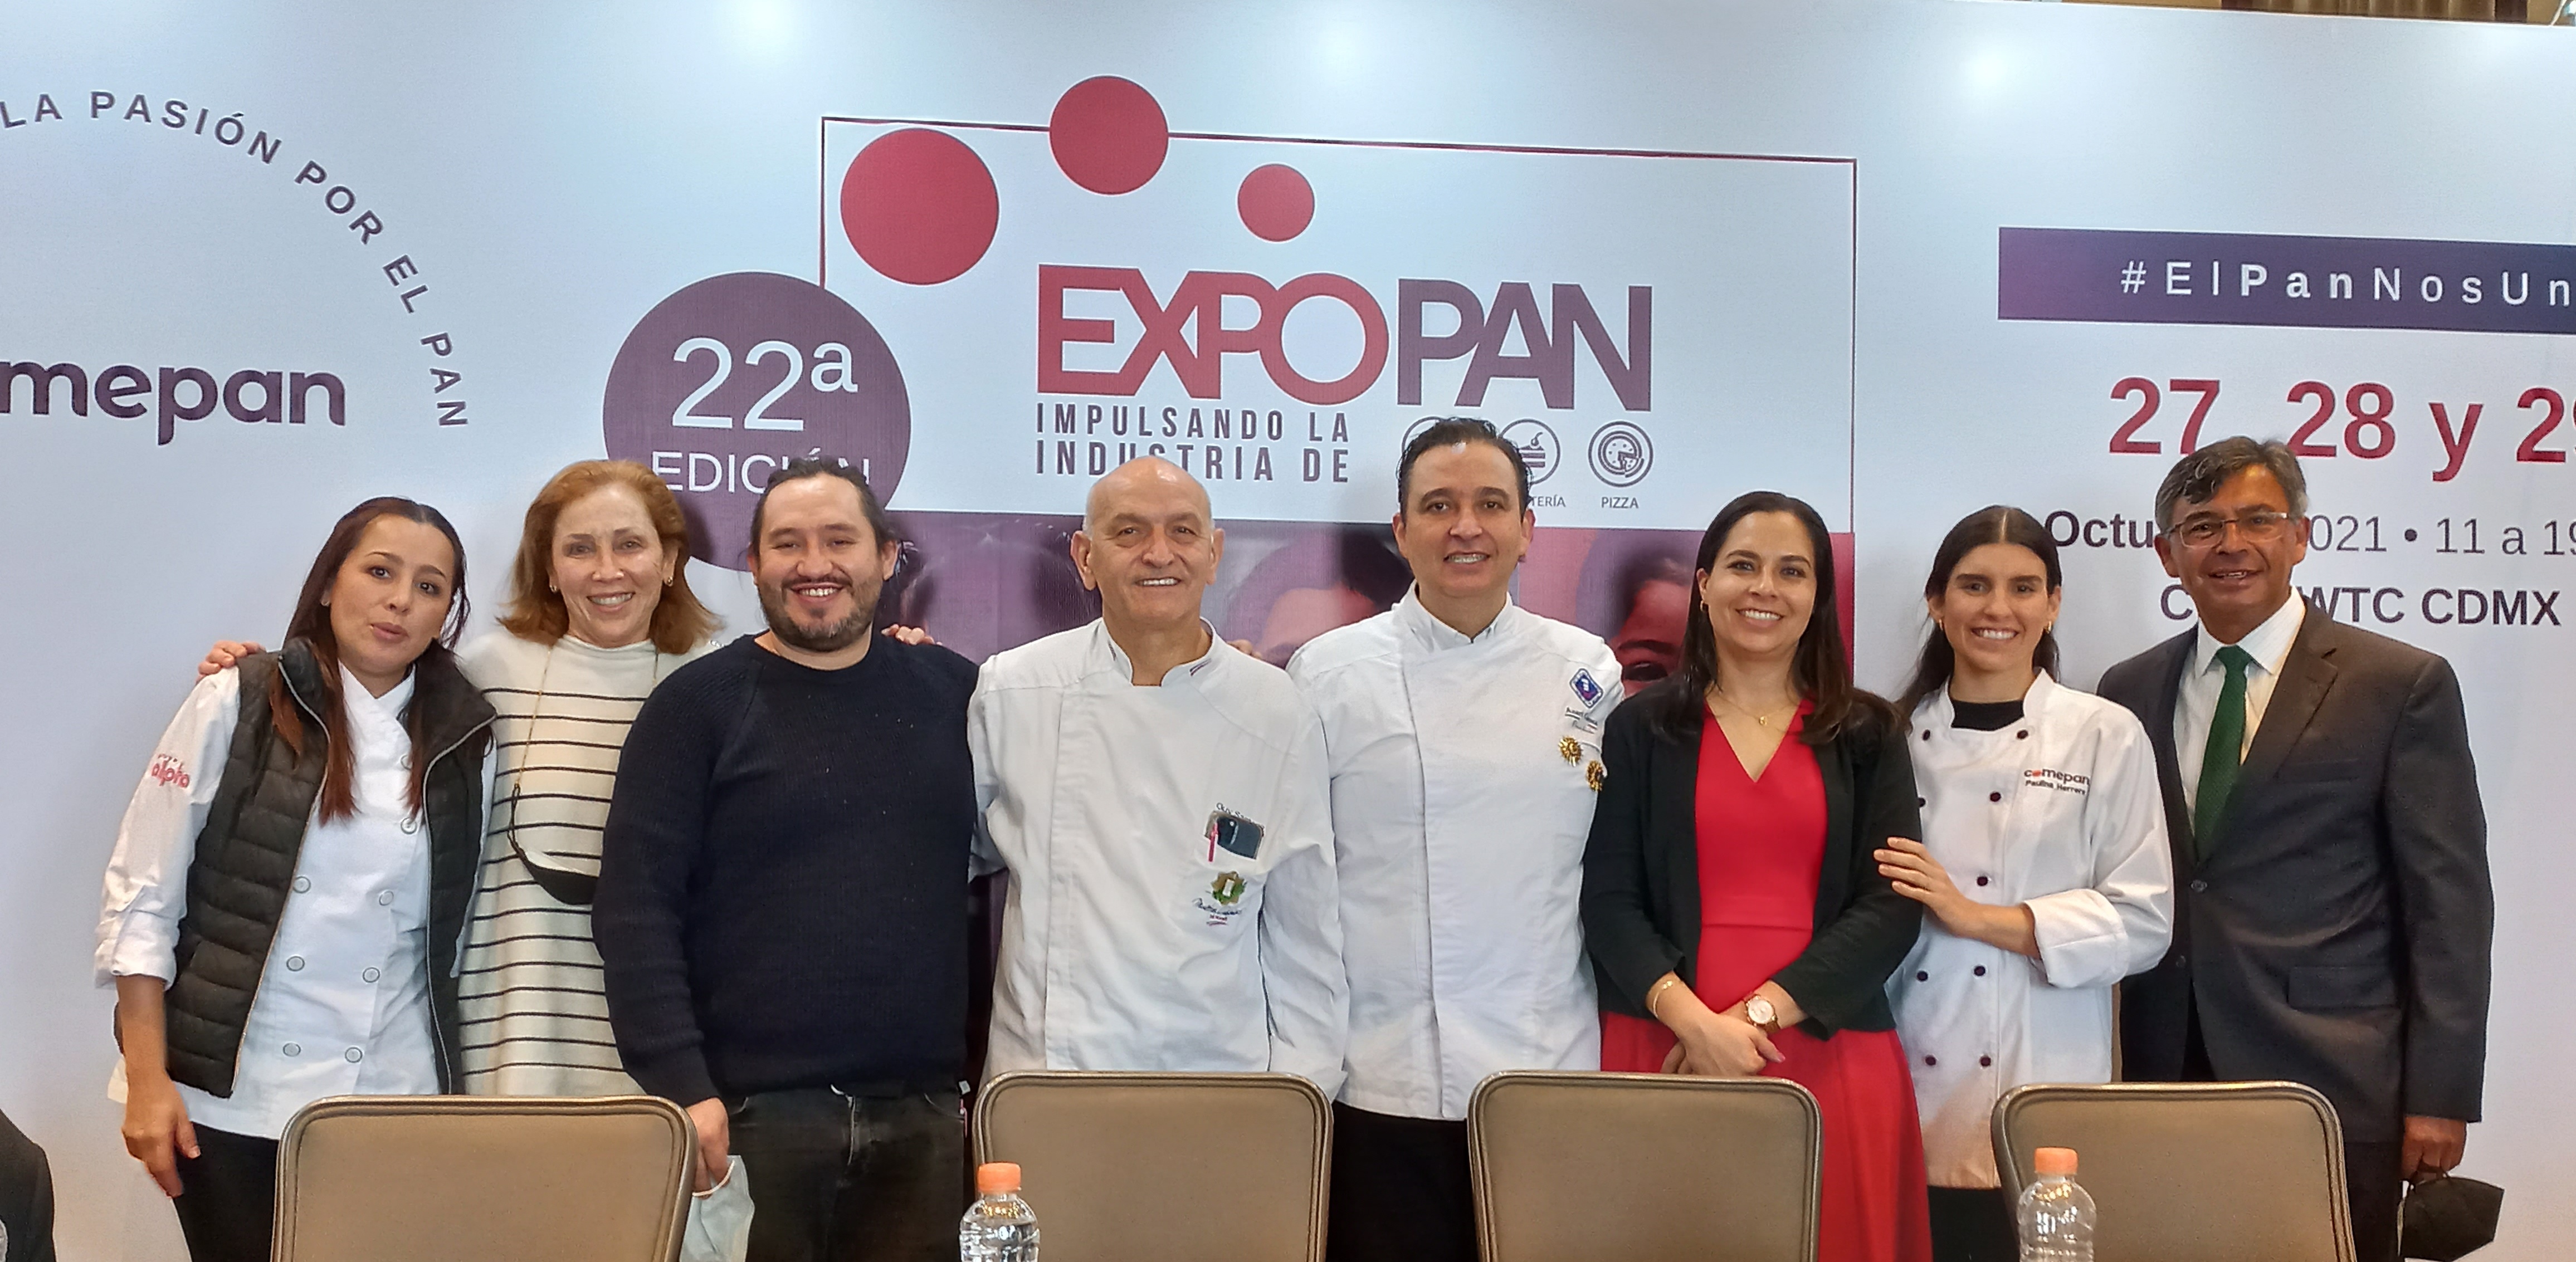 Al pan, Expo Pan